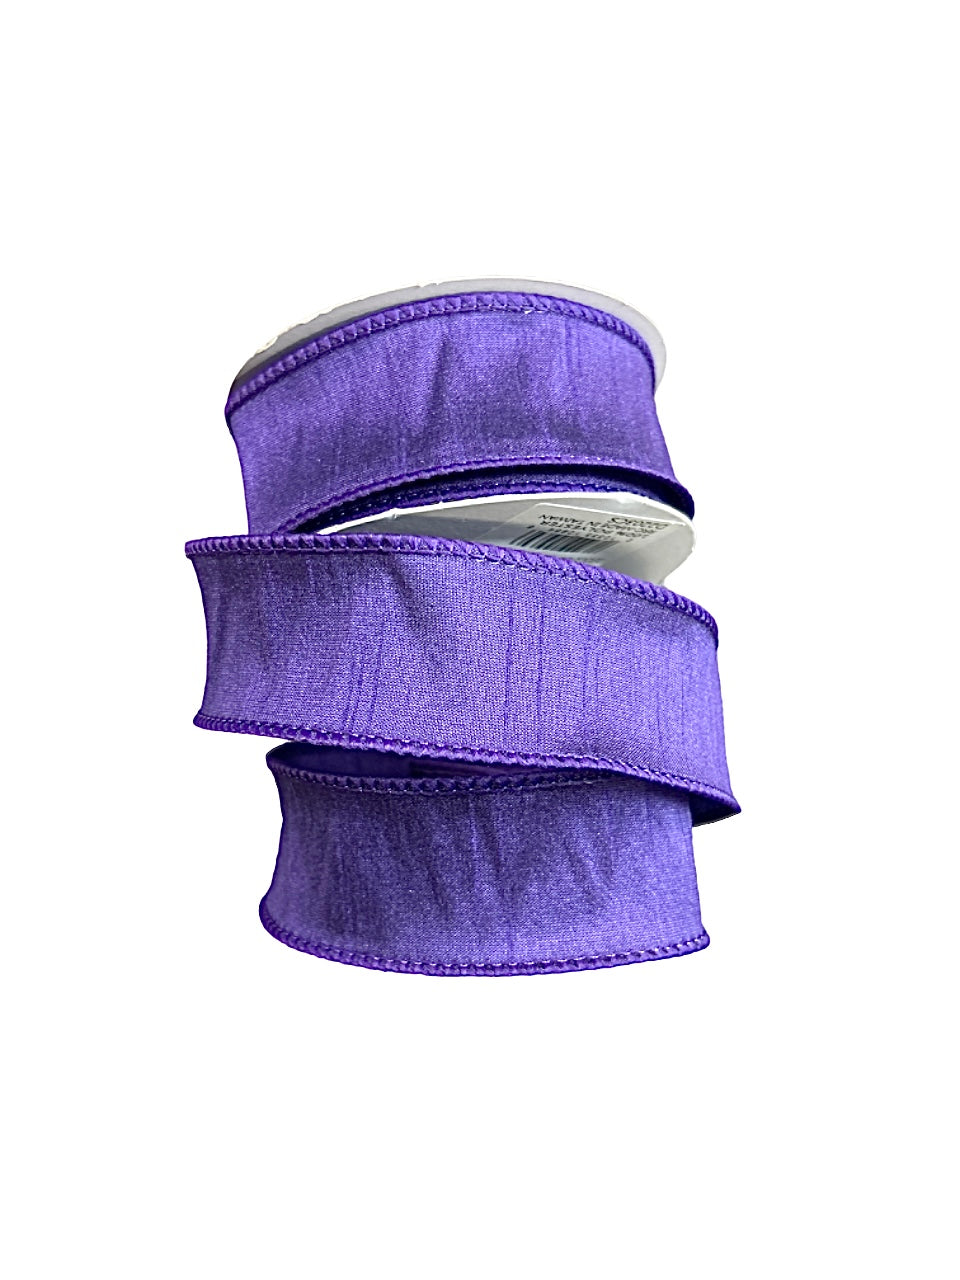 Dupioni Wired edge Ribbon Purple 1 1/2”X10yds